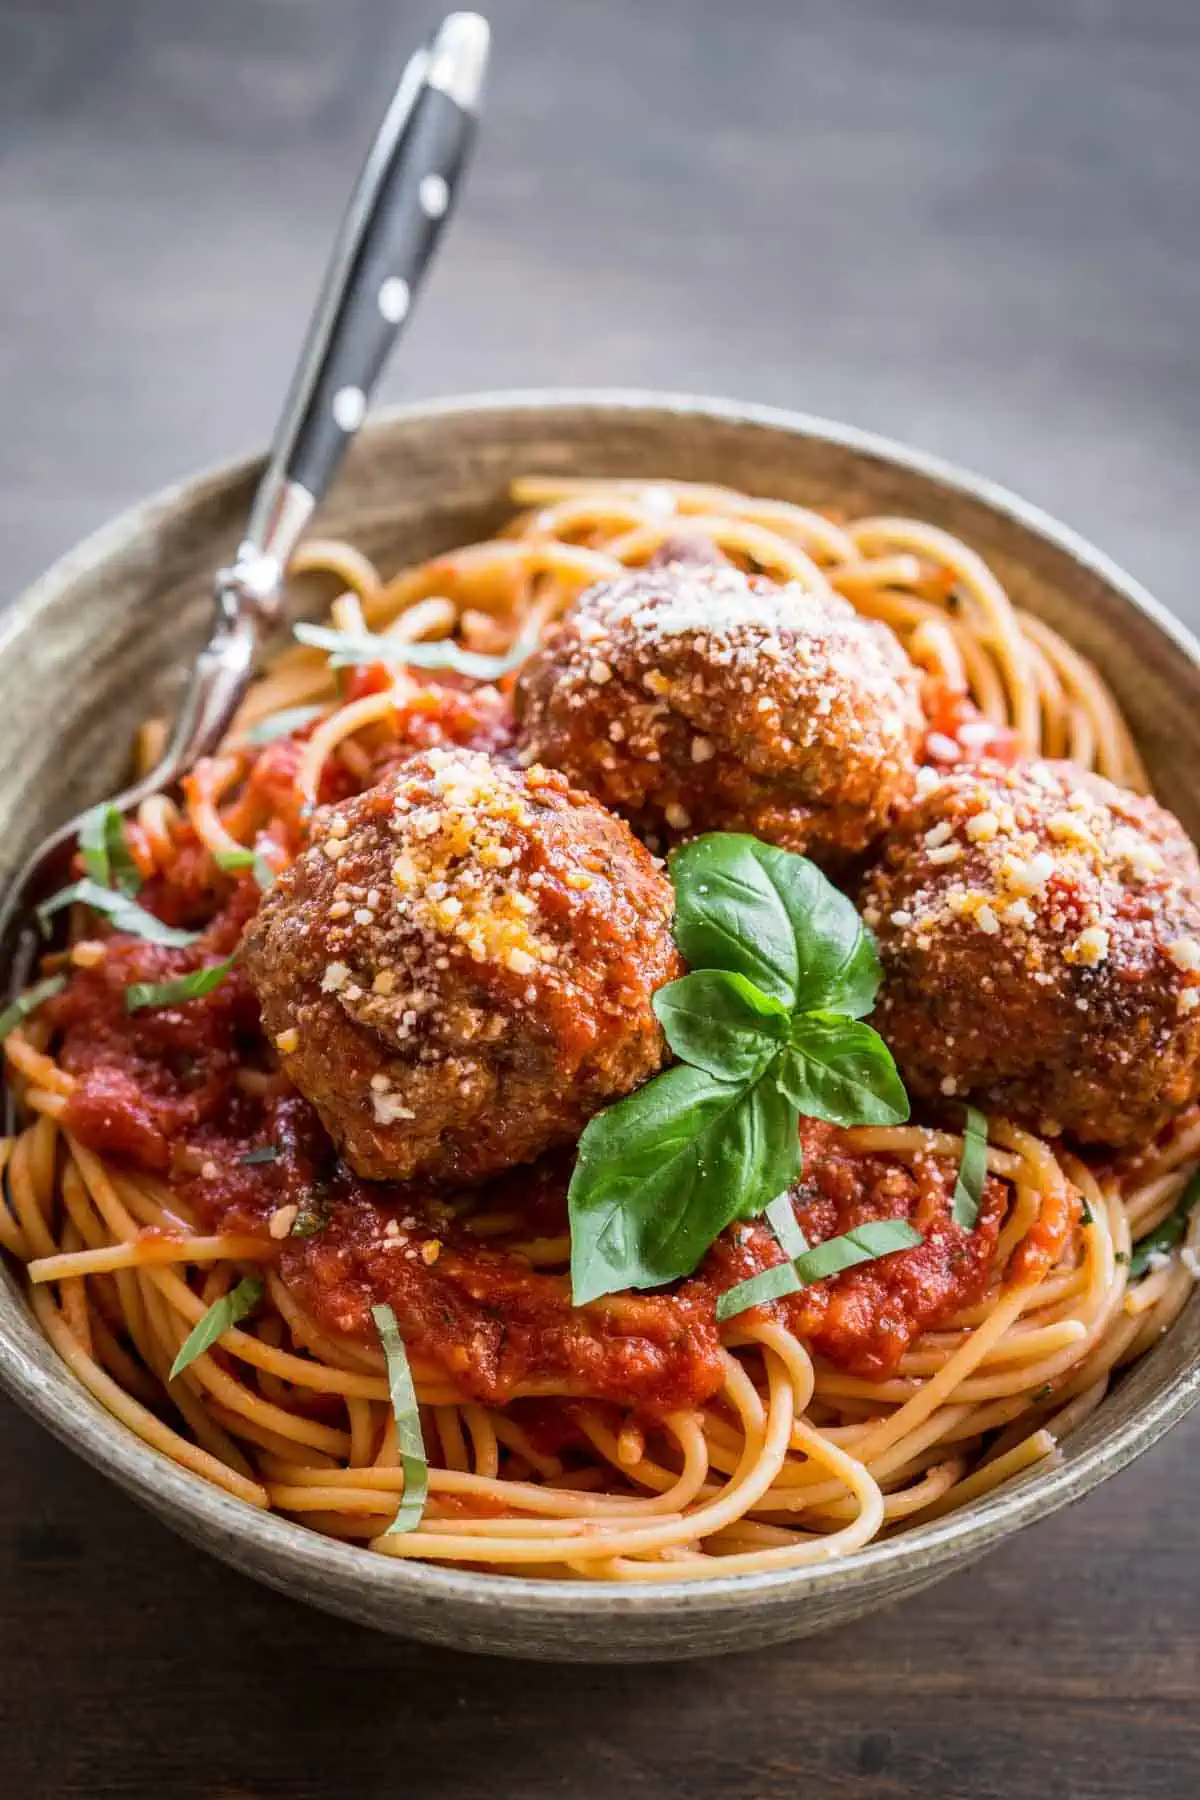 Spaghetti with Italian meatball recipe.